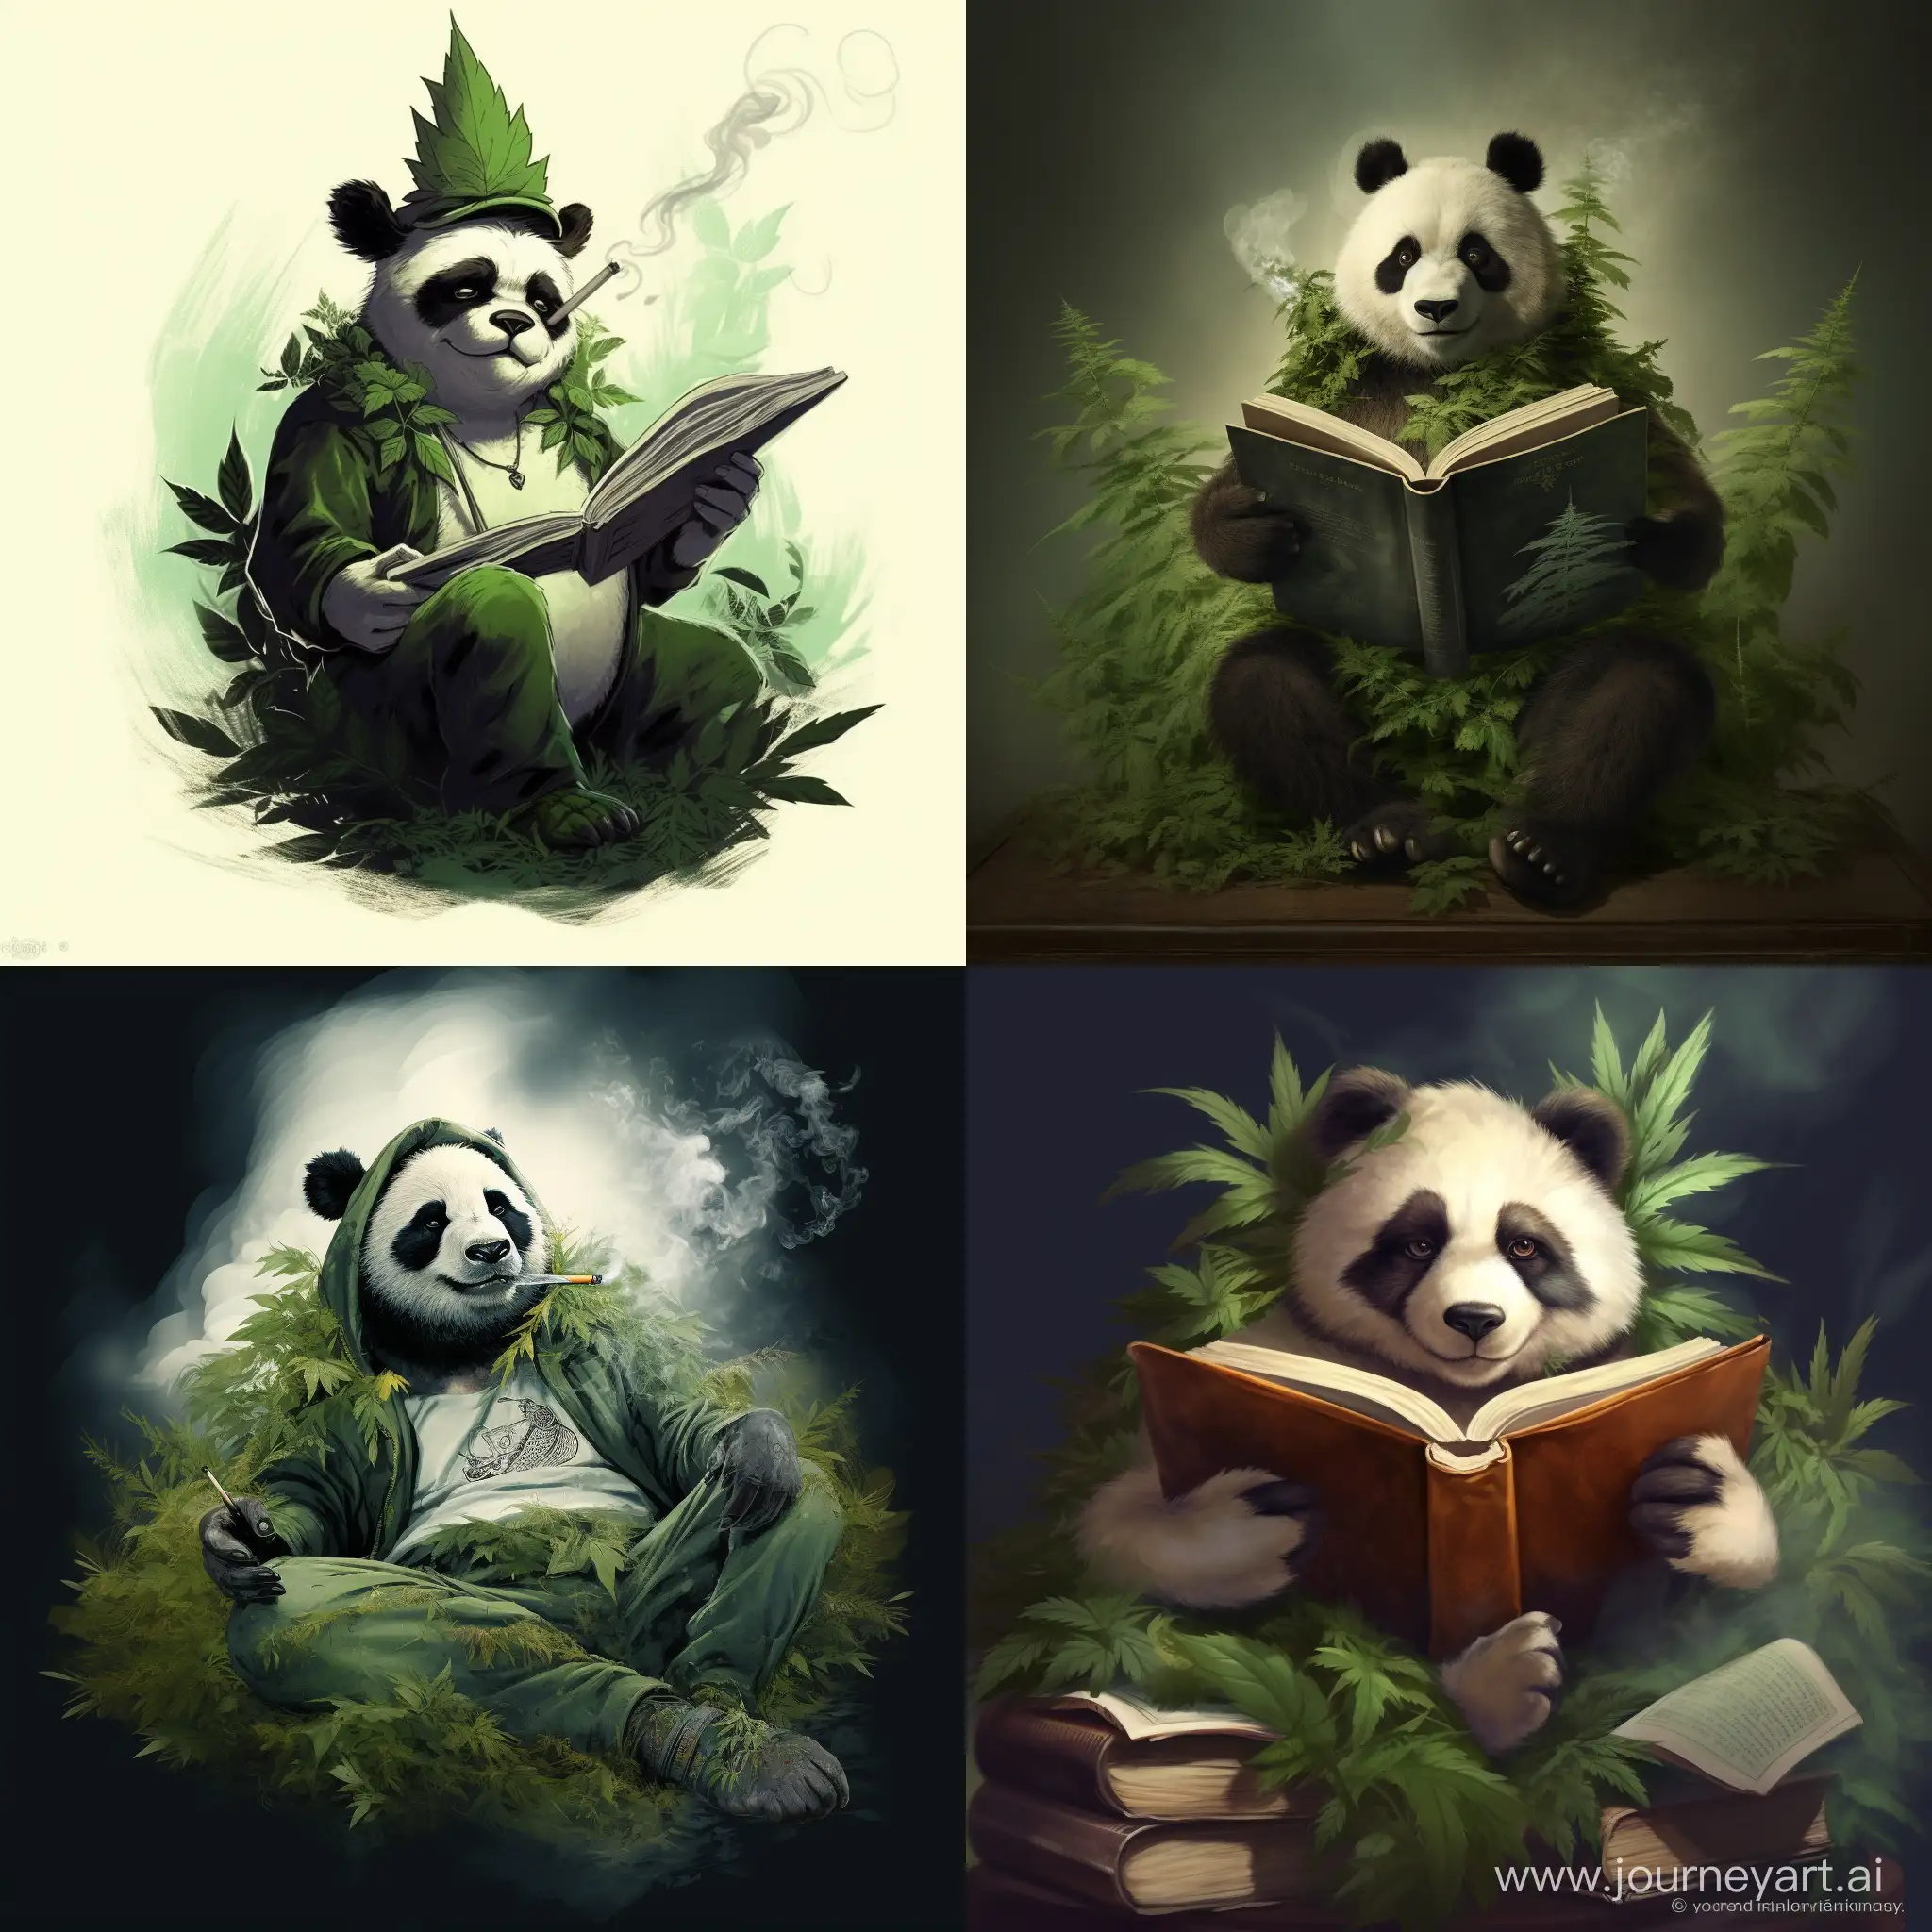 Cheerful-Panda-Enjoying-a-Relaxing-Moment-in-Gardens-Society